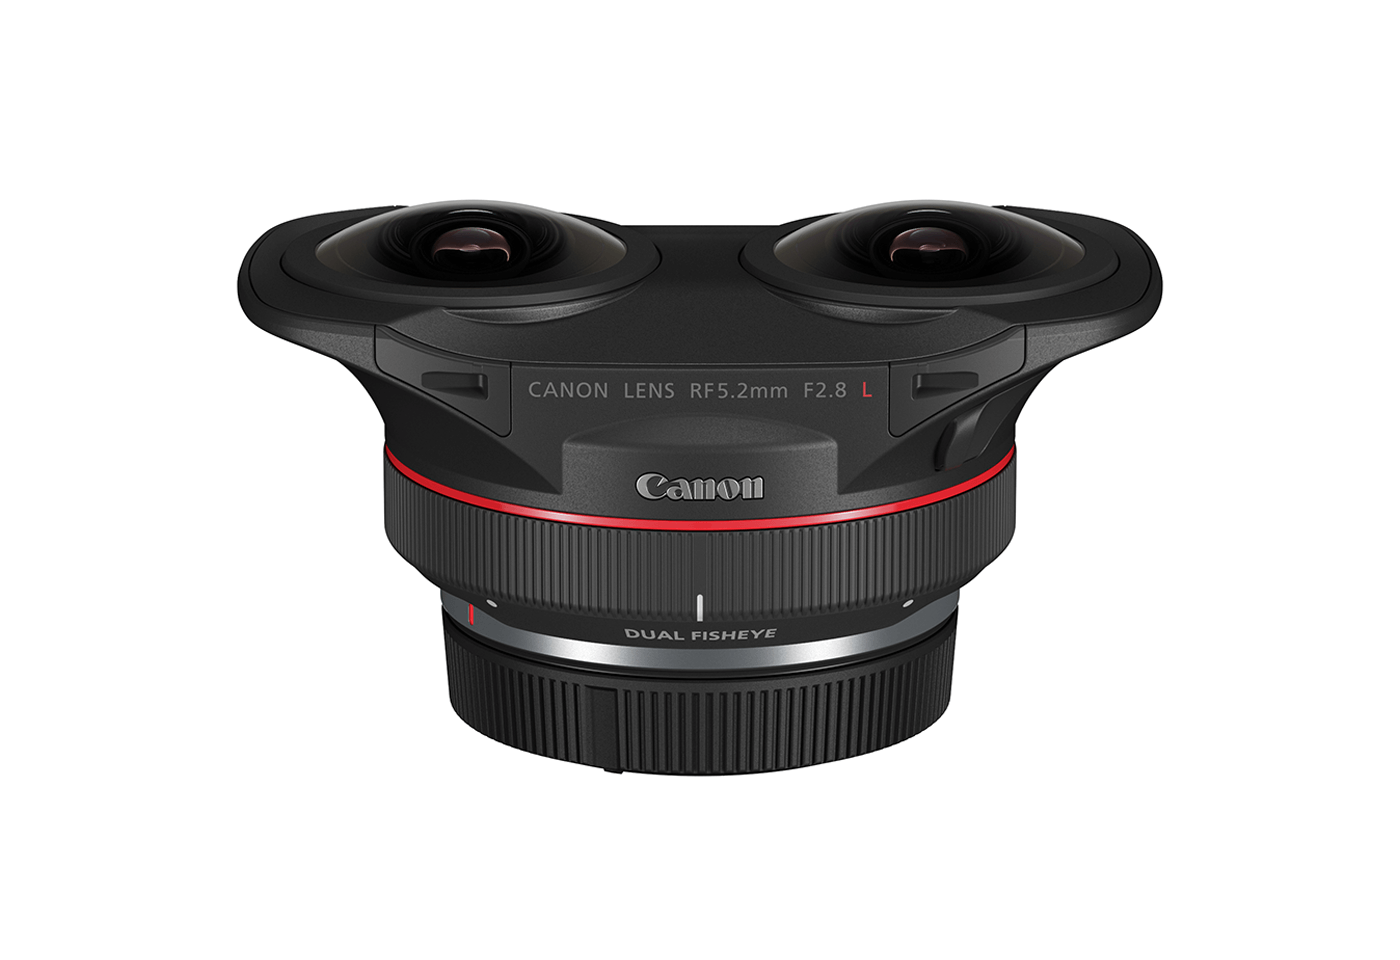 Side profile image of RF 5.2mm f/2.8 L Dual Fisheye lens with cap